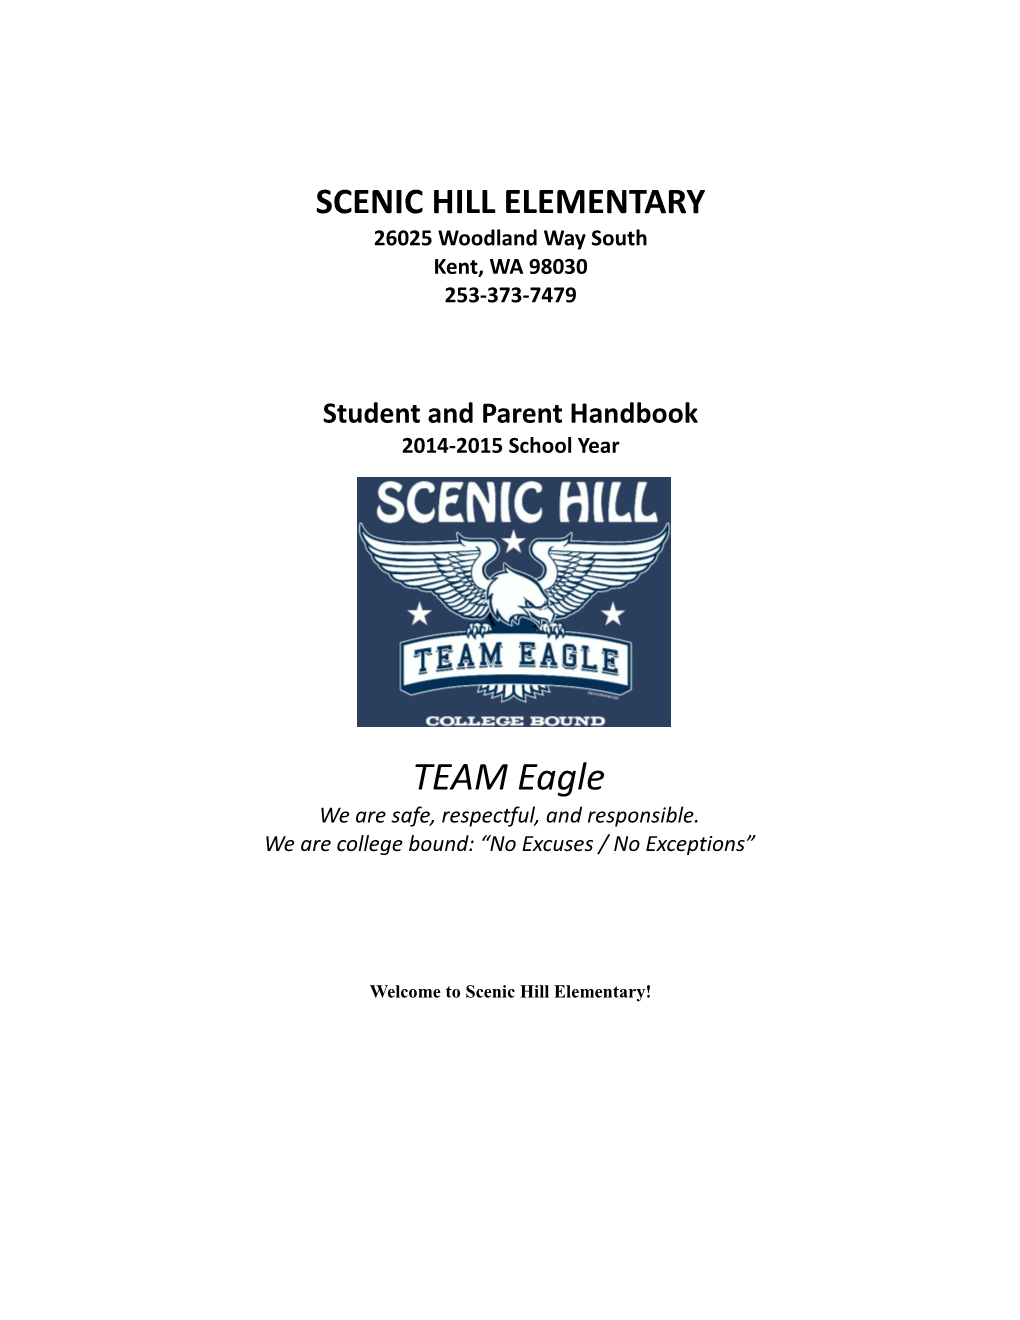 Scenic Hill Elementary